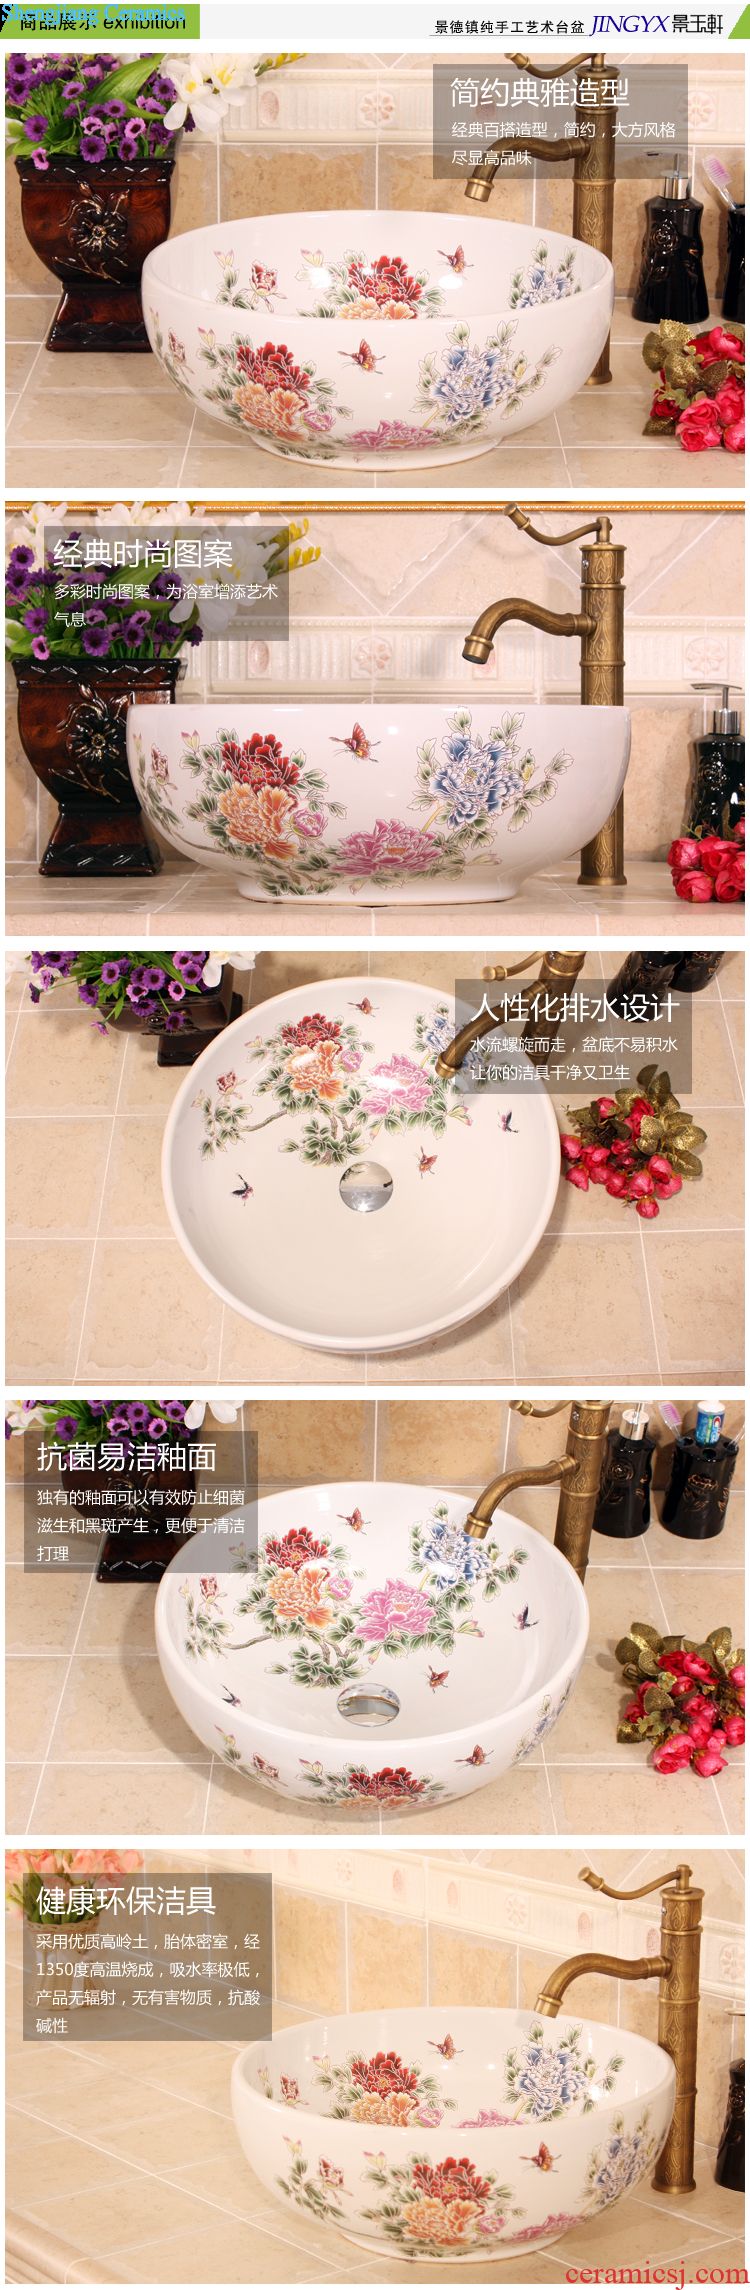 Jingdezhen ceramic JingYuXuan lavatory basin sink art basin basin lettering on stage